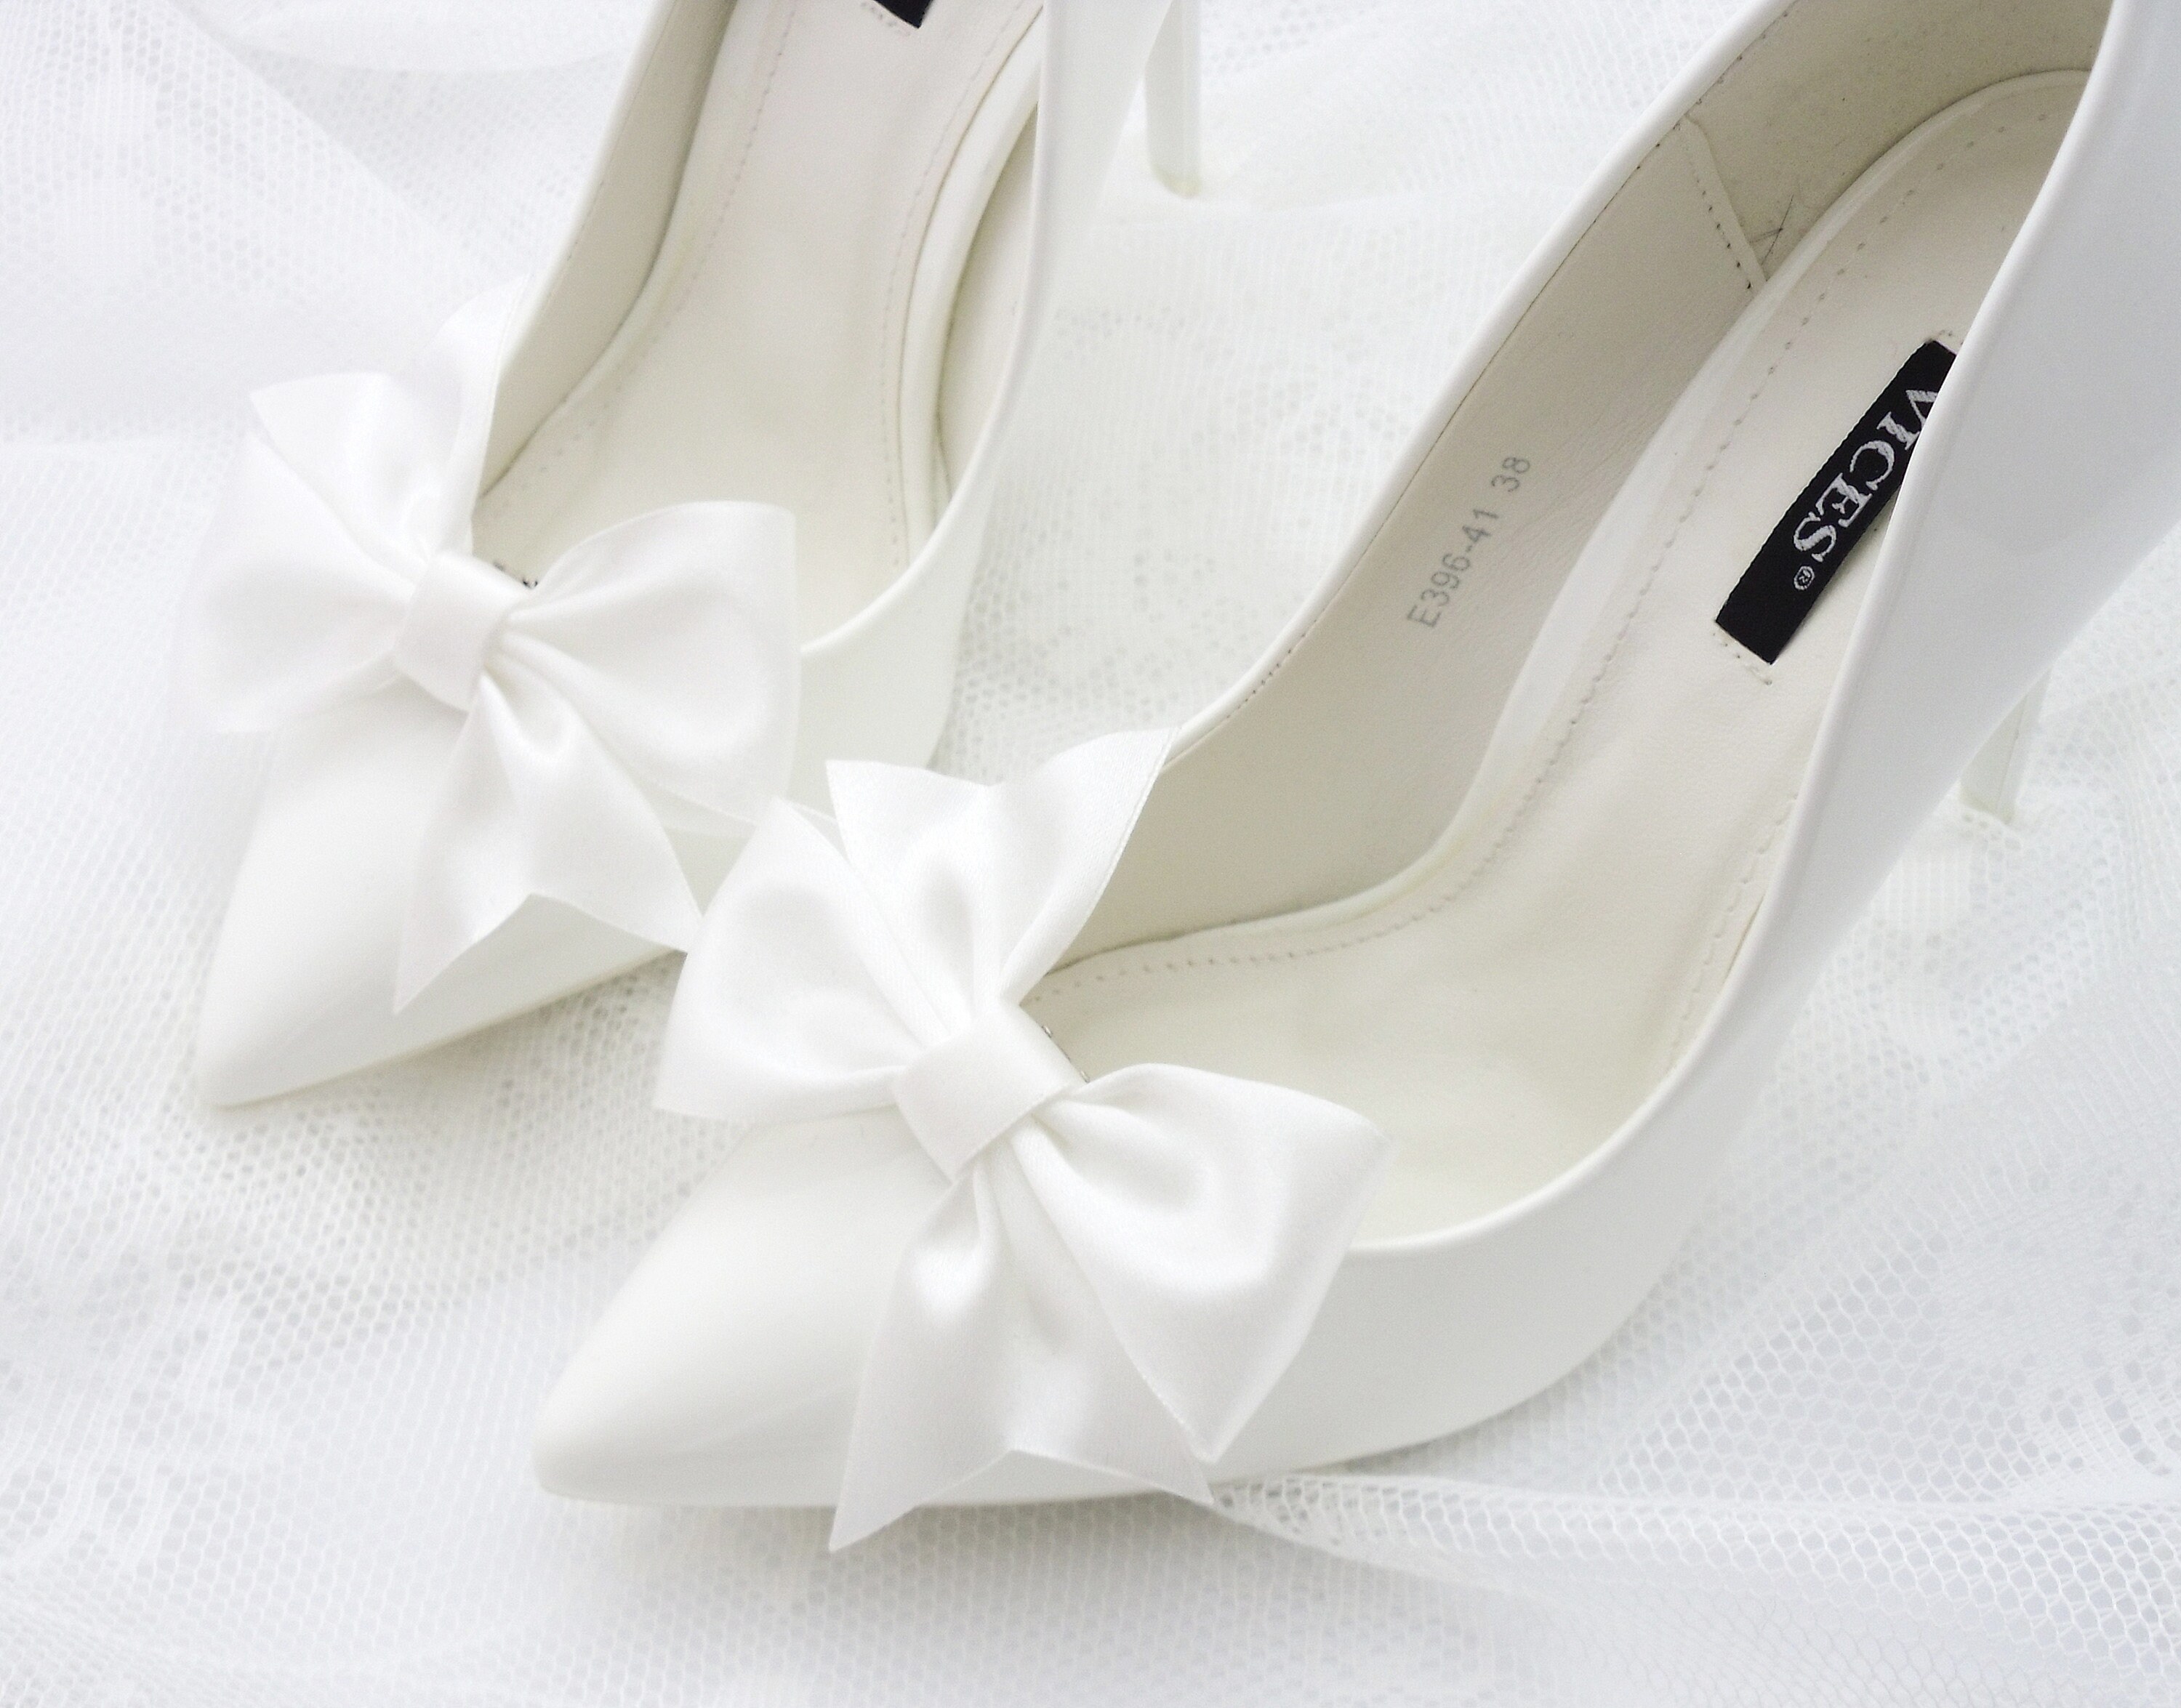 White Satin and Diamante Bow Shoe Clips